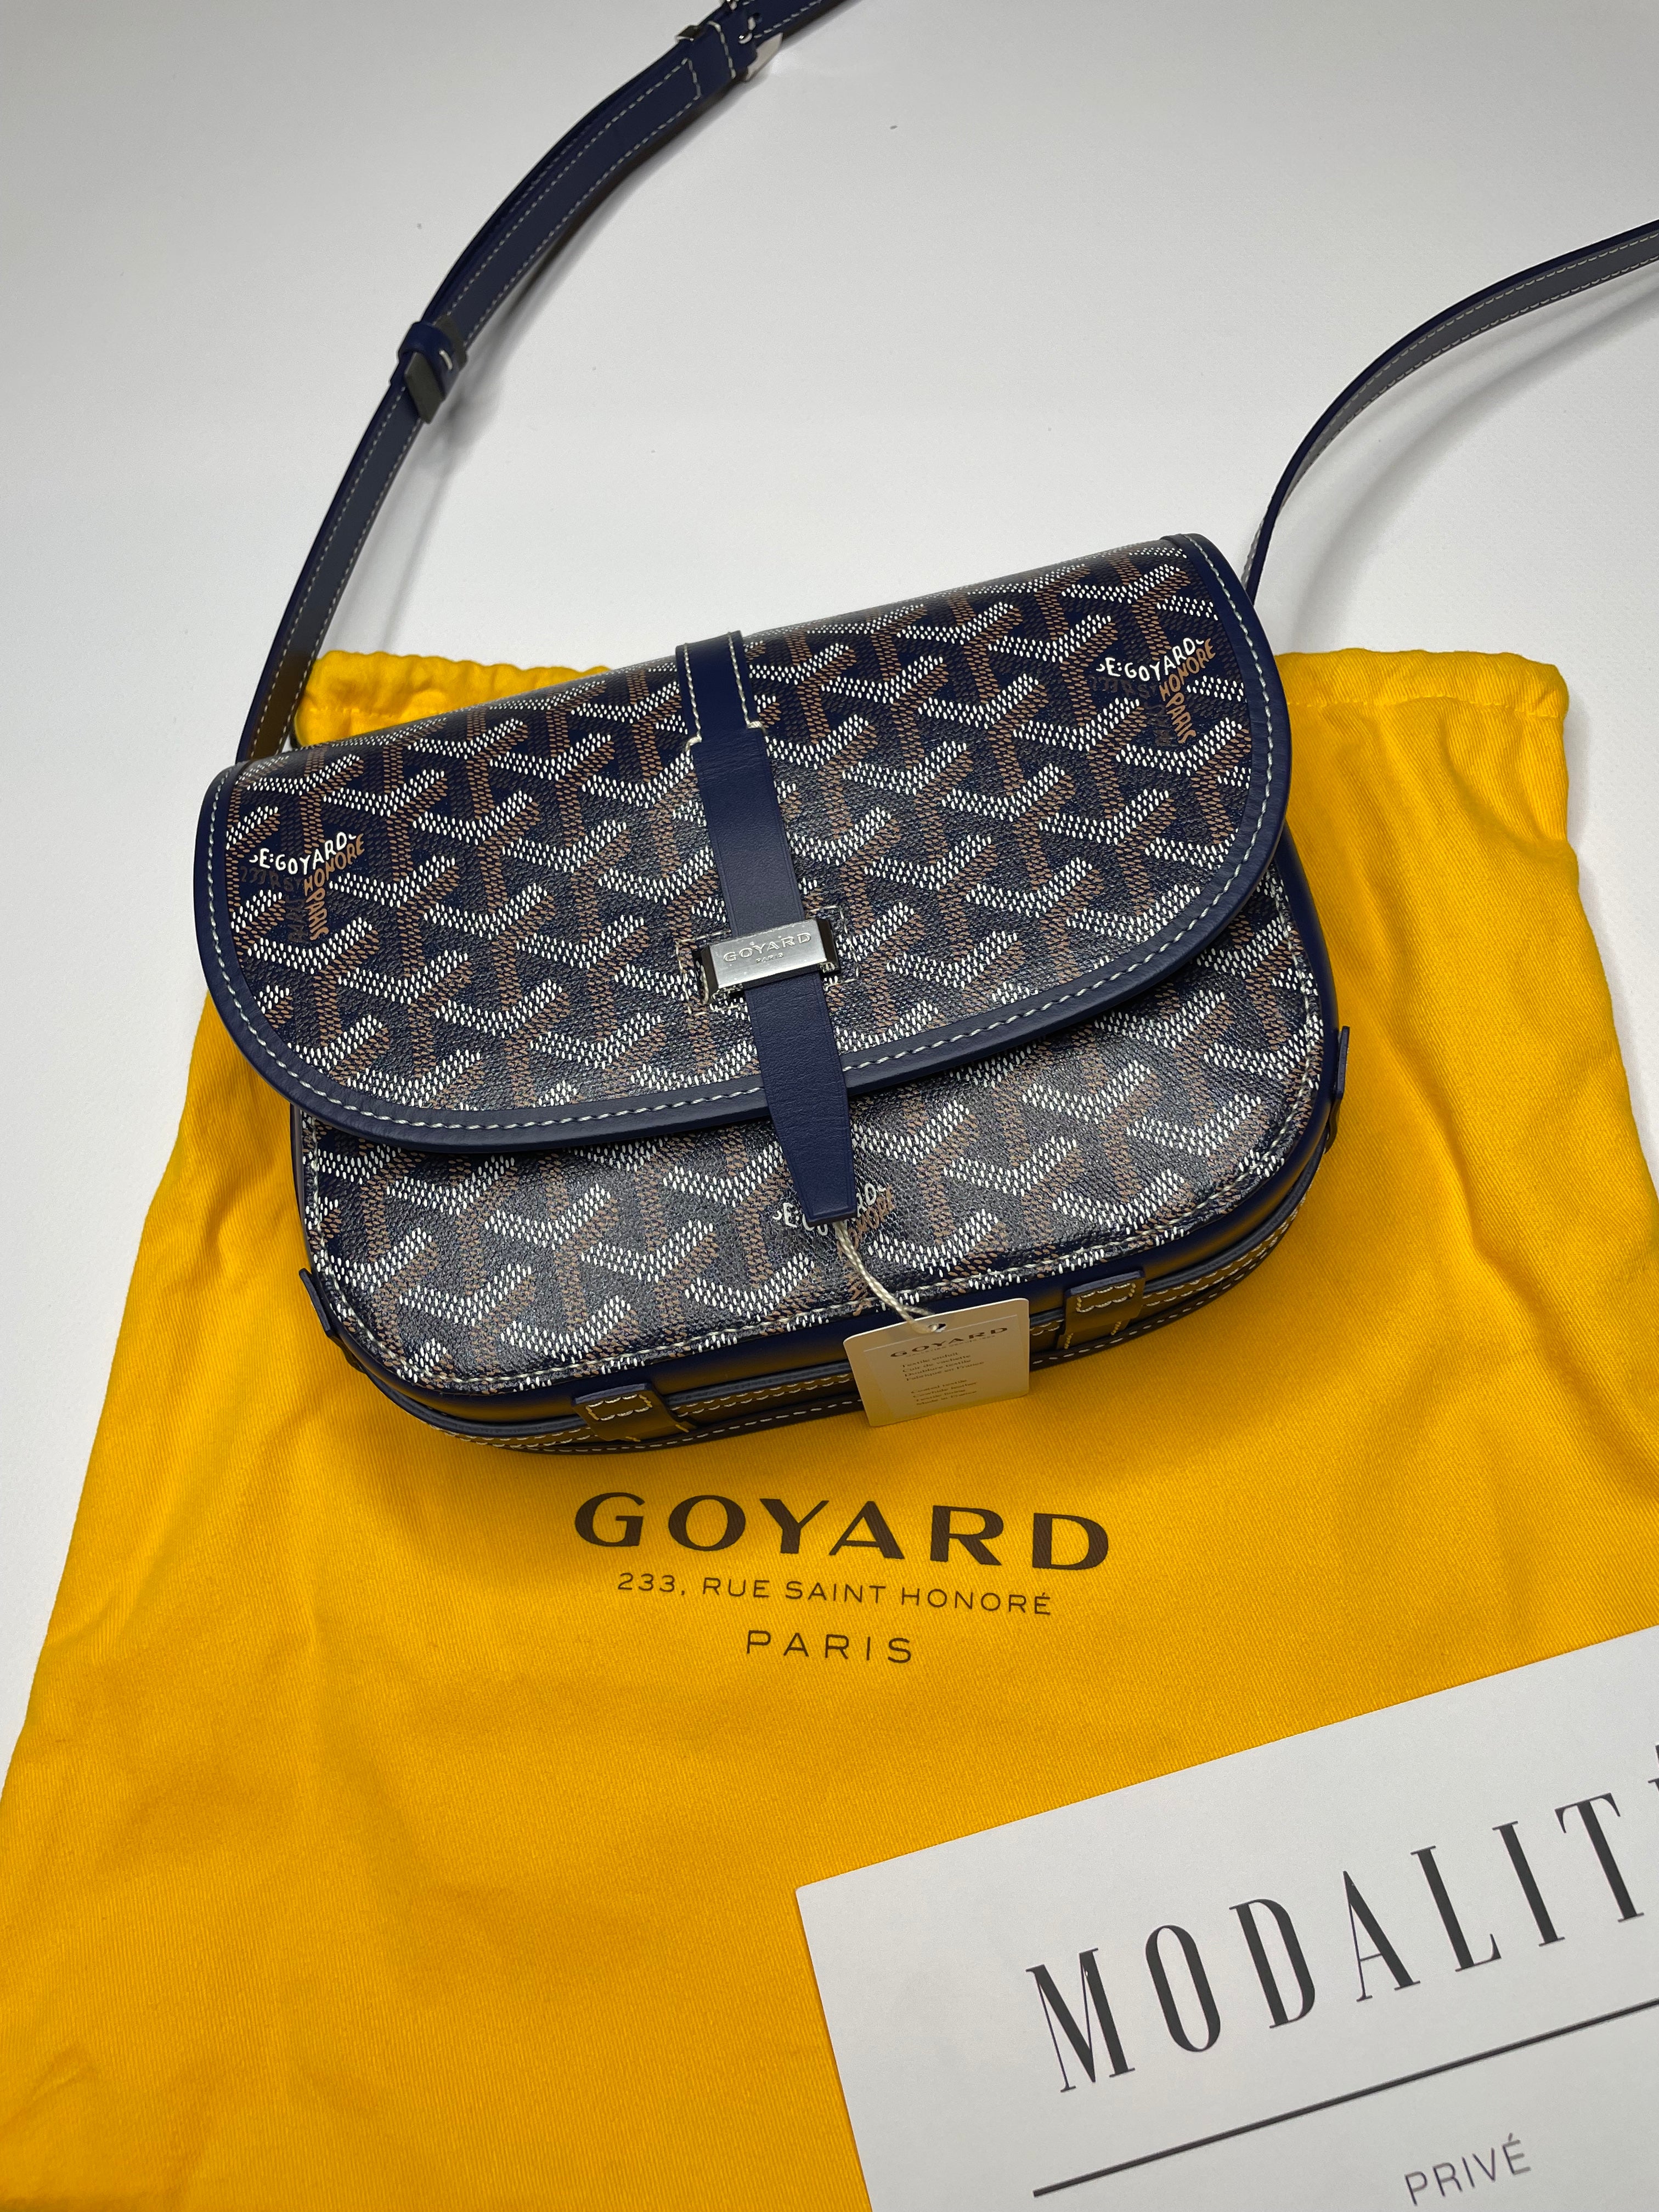 Goyard Belvedere PM bag – Modalite Prive